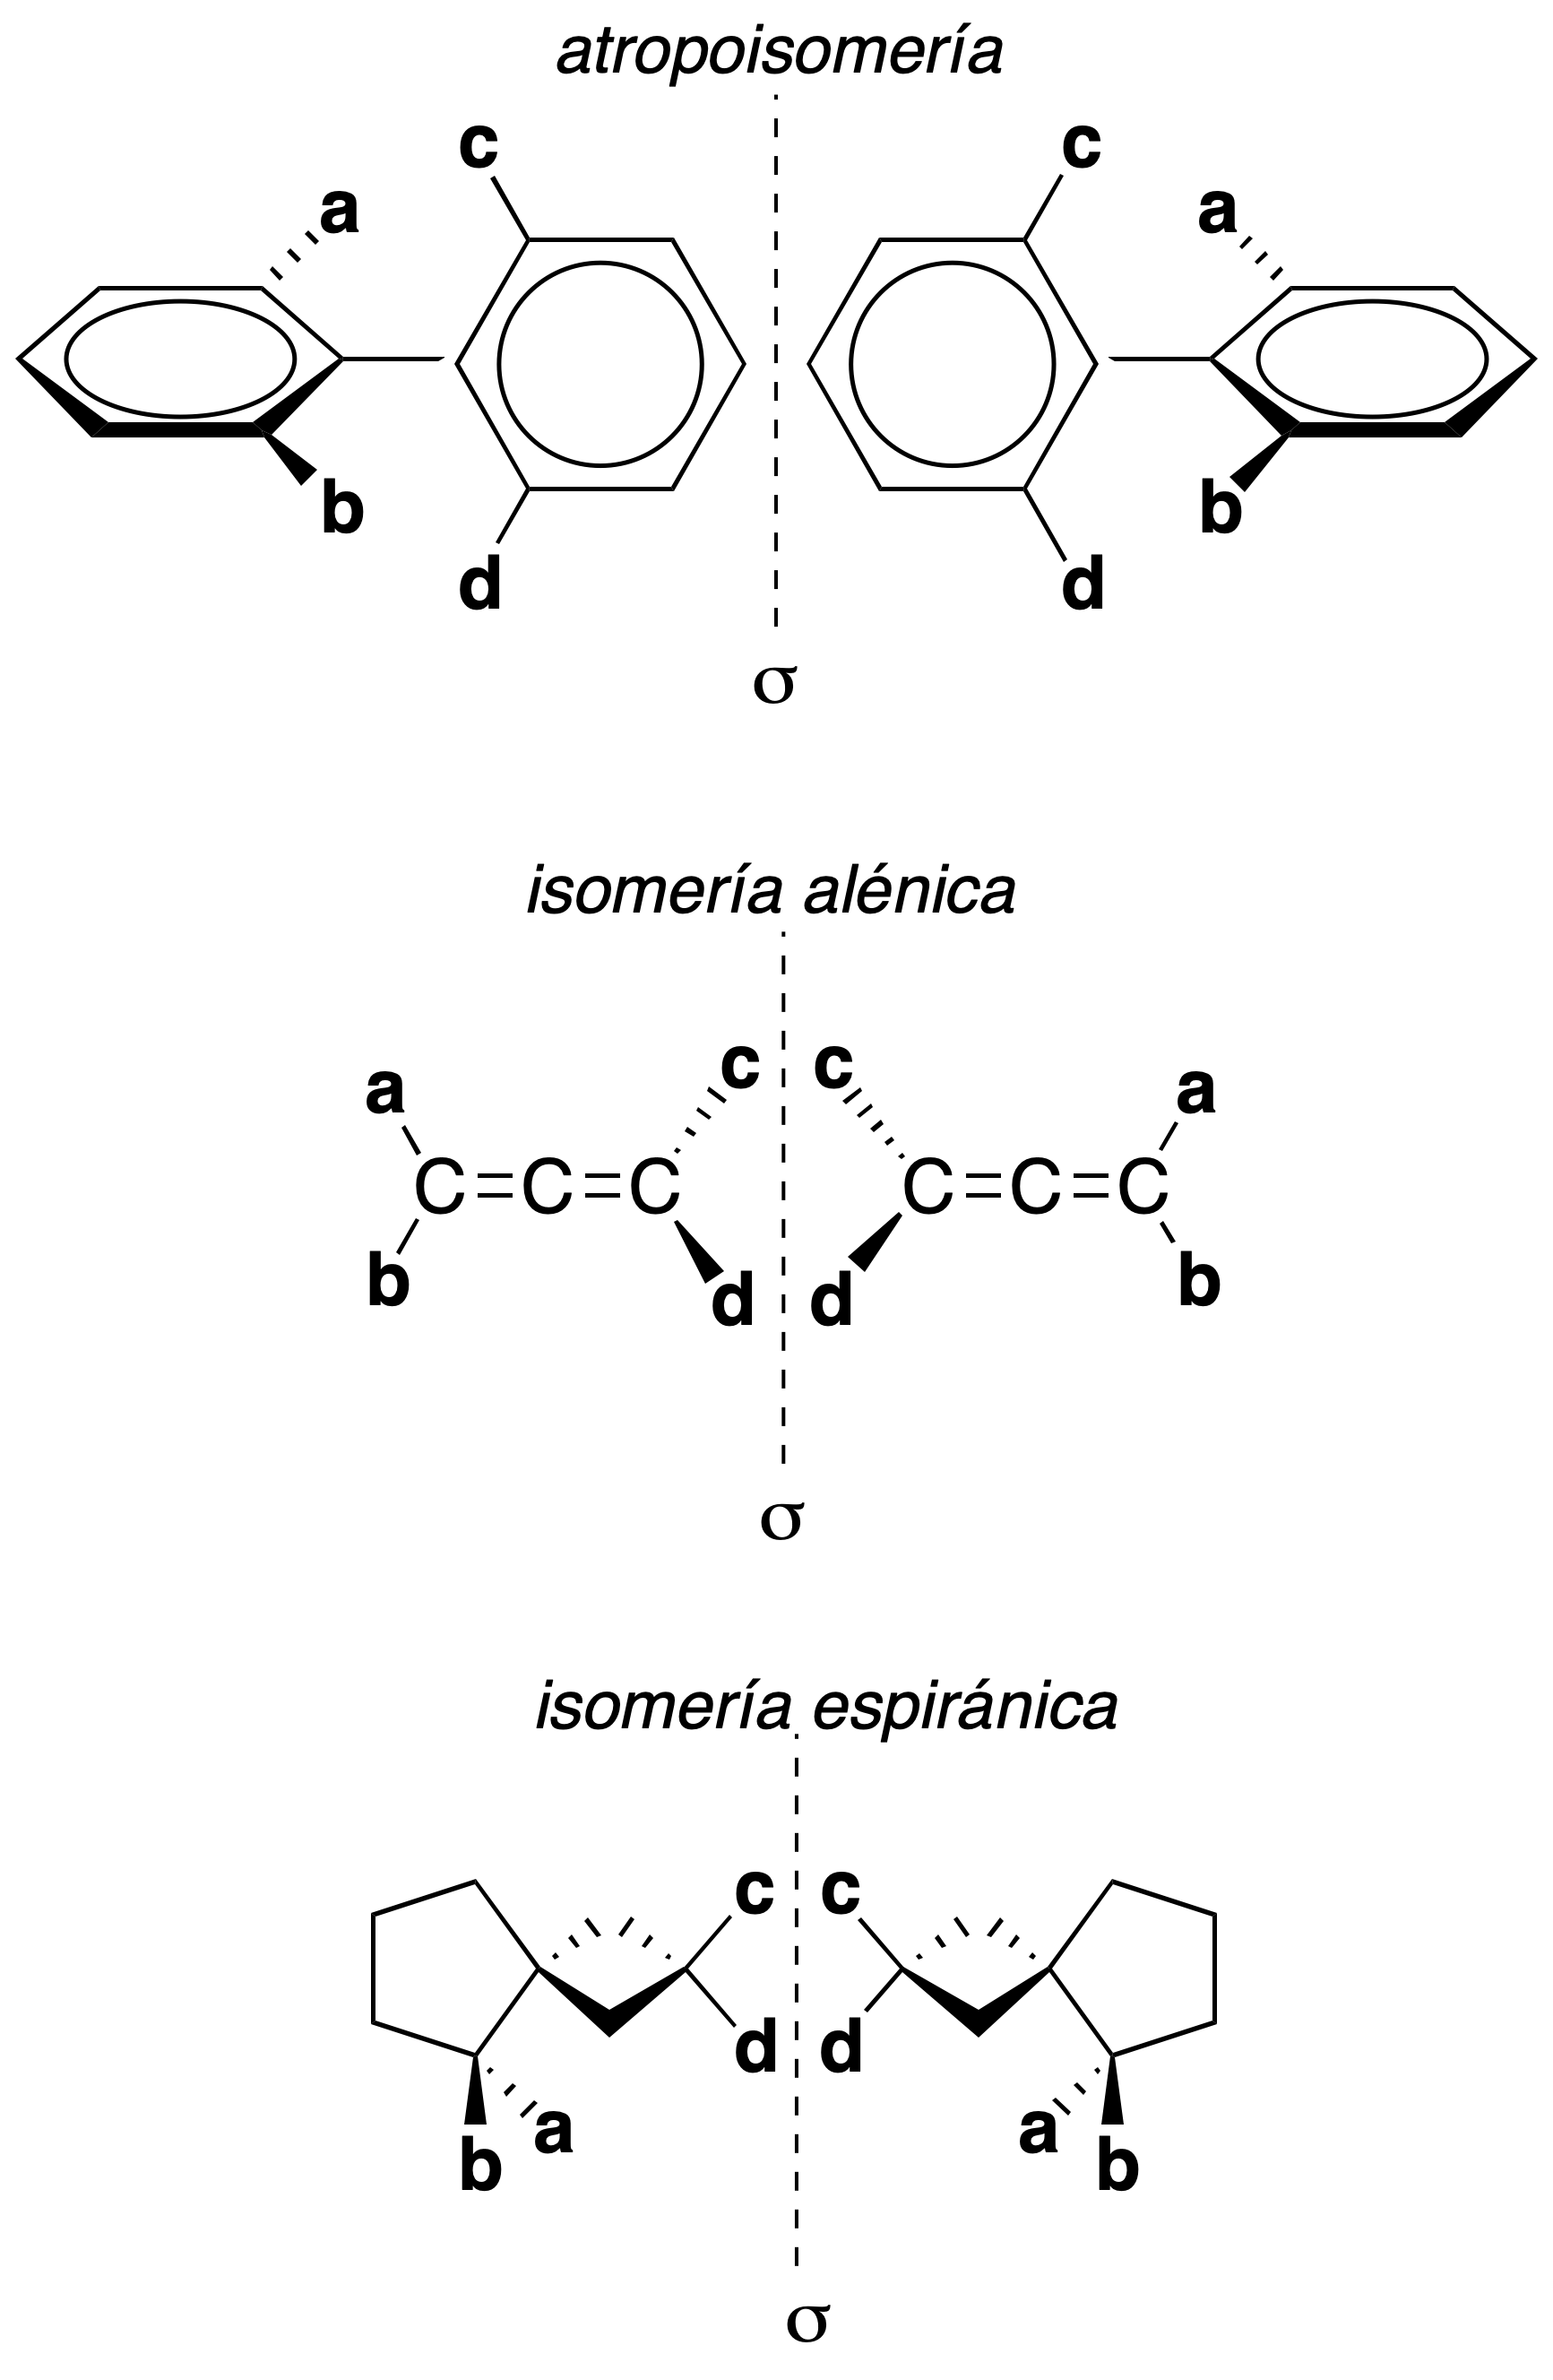 chiral centerless stereoisomerism aptropoisomerism alenic and spiranic isomerism